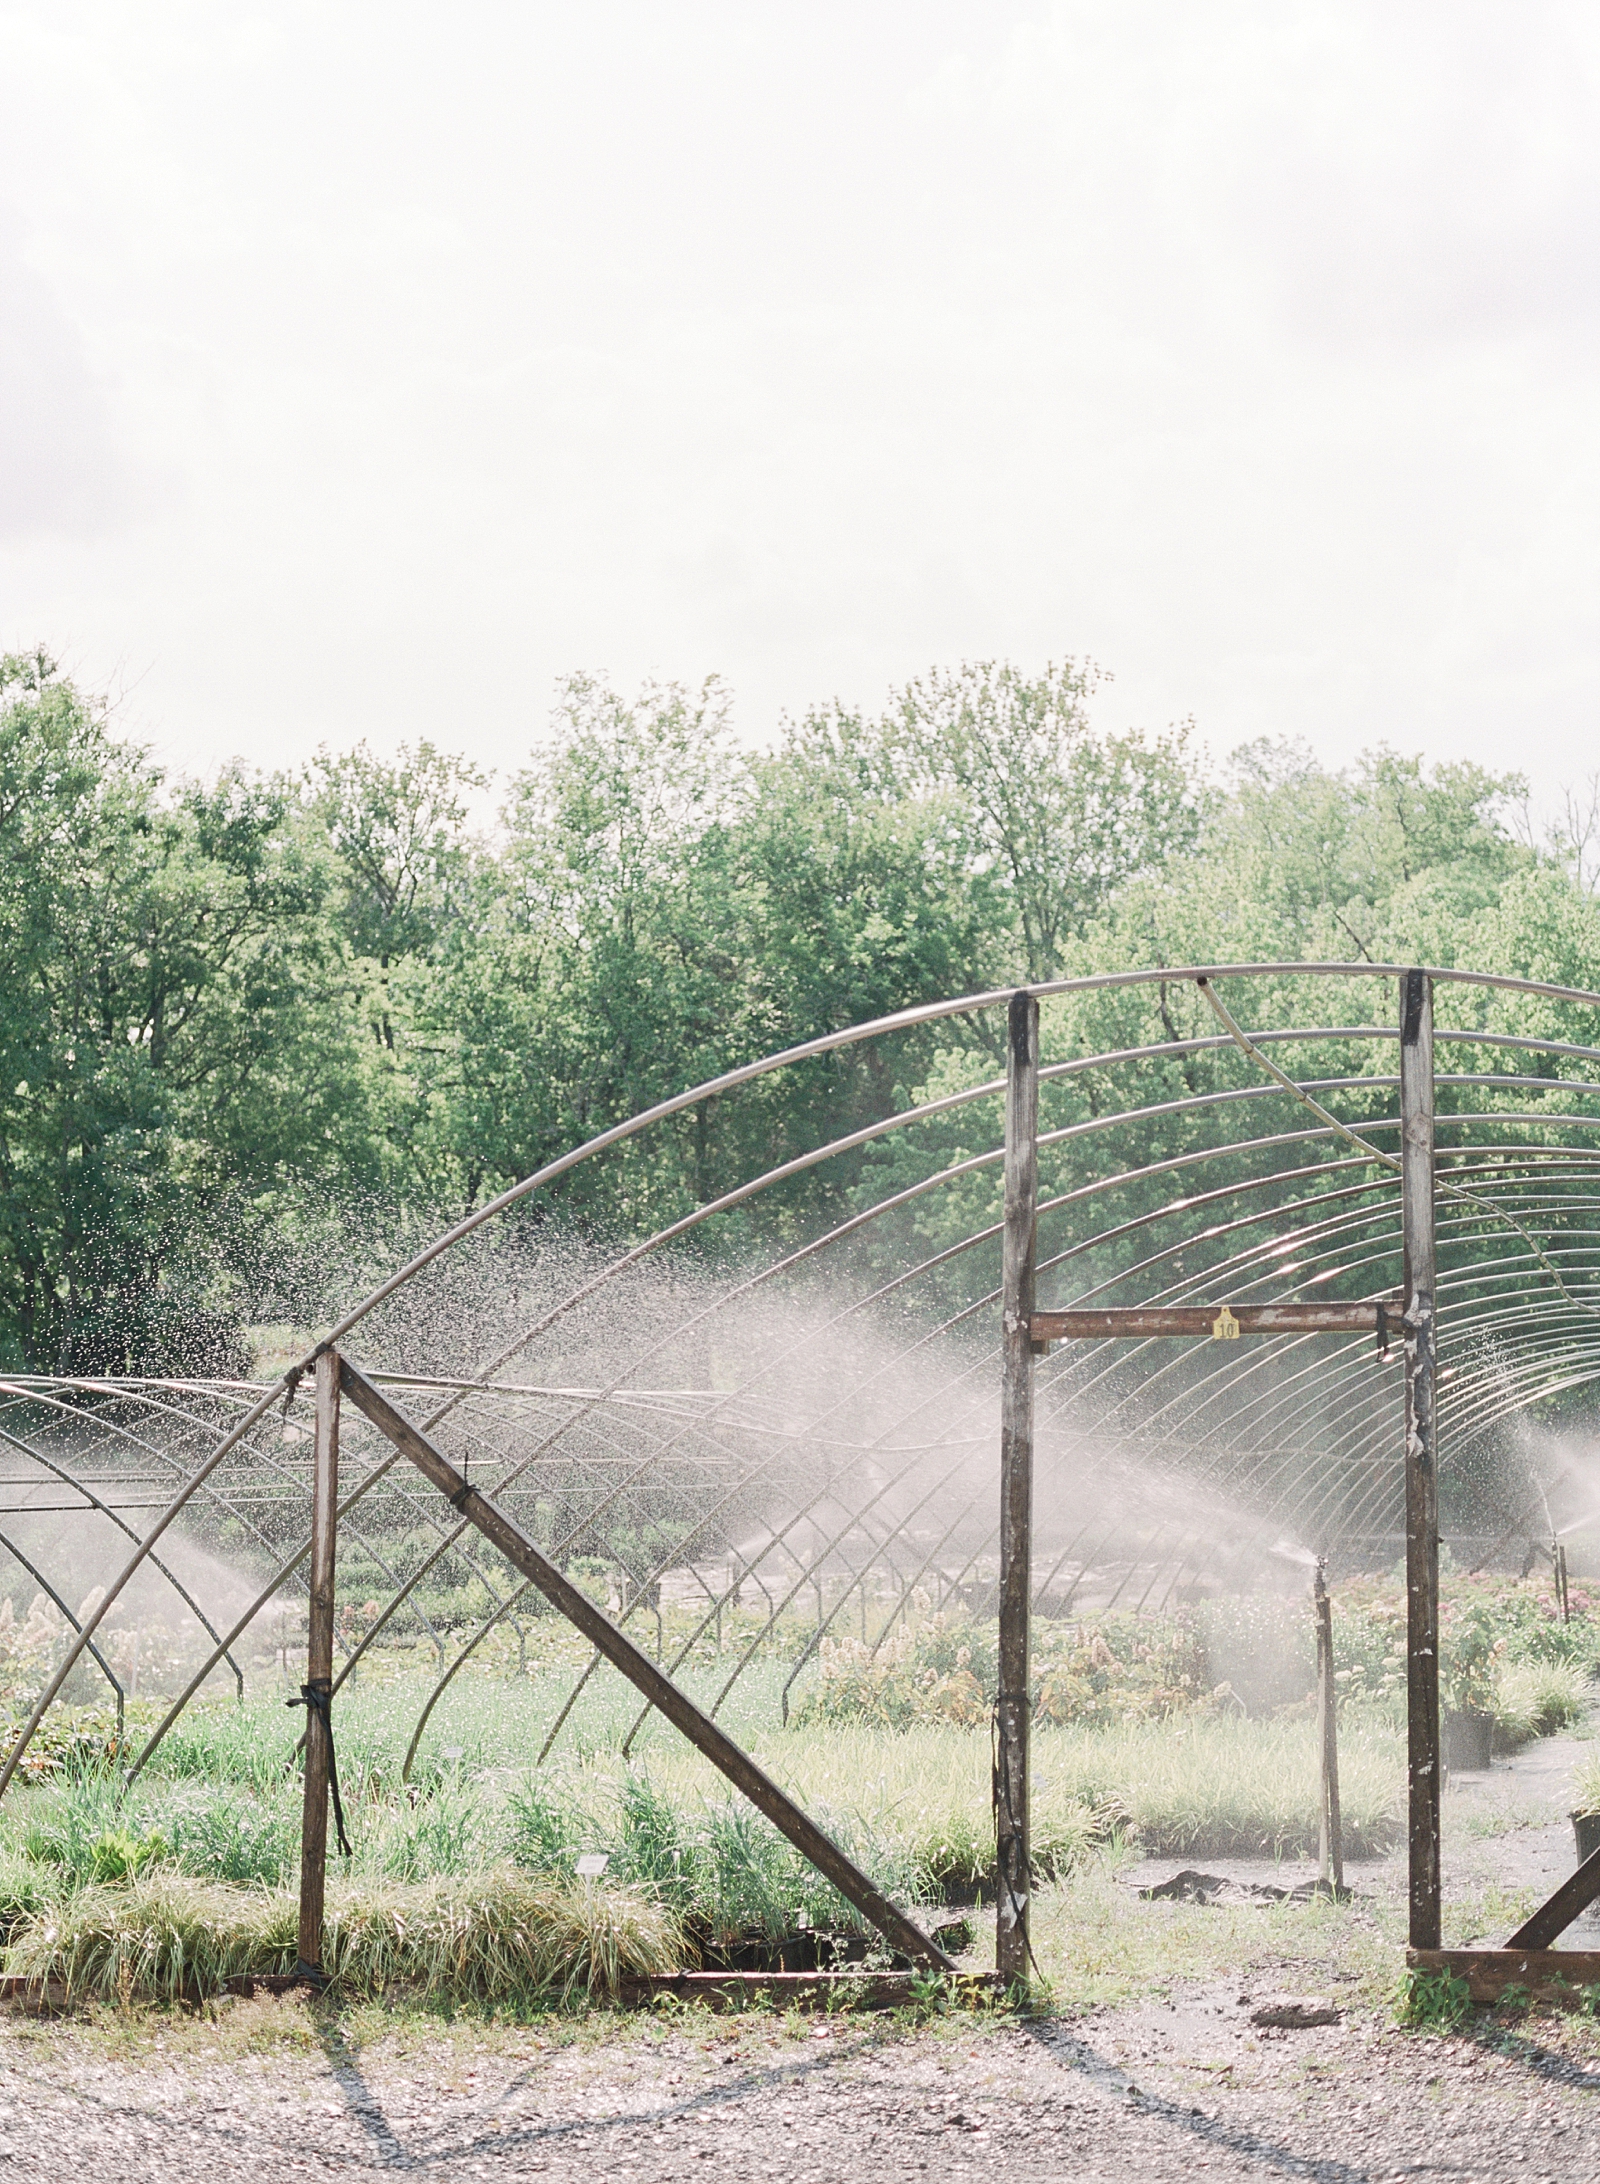 Black Fox Farms Garden Wedding Venue Sprinklers on in Greenhouses Photo